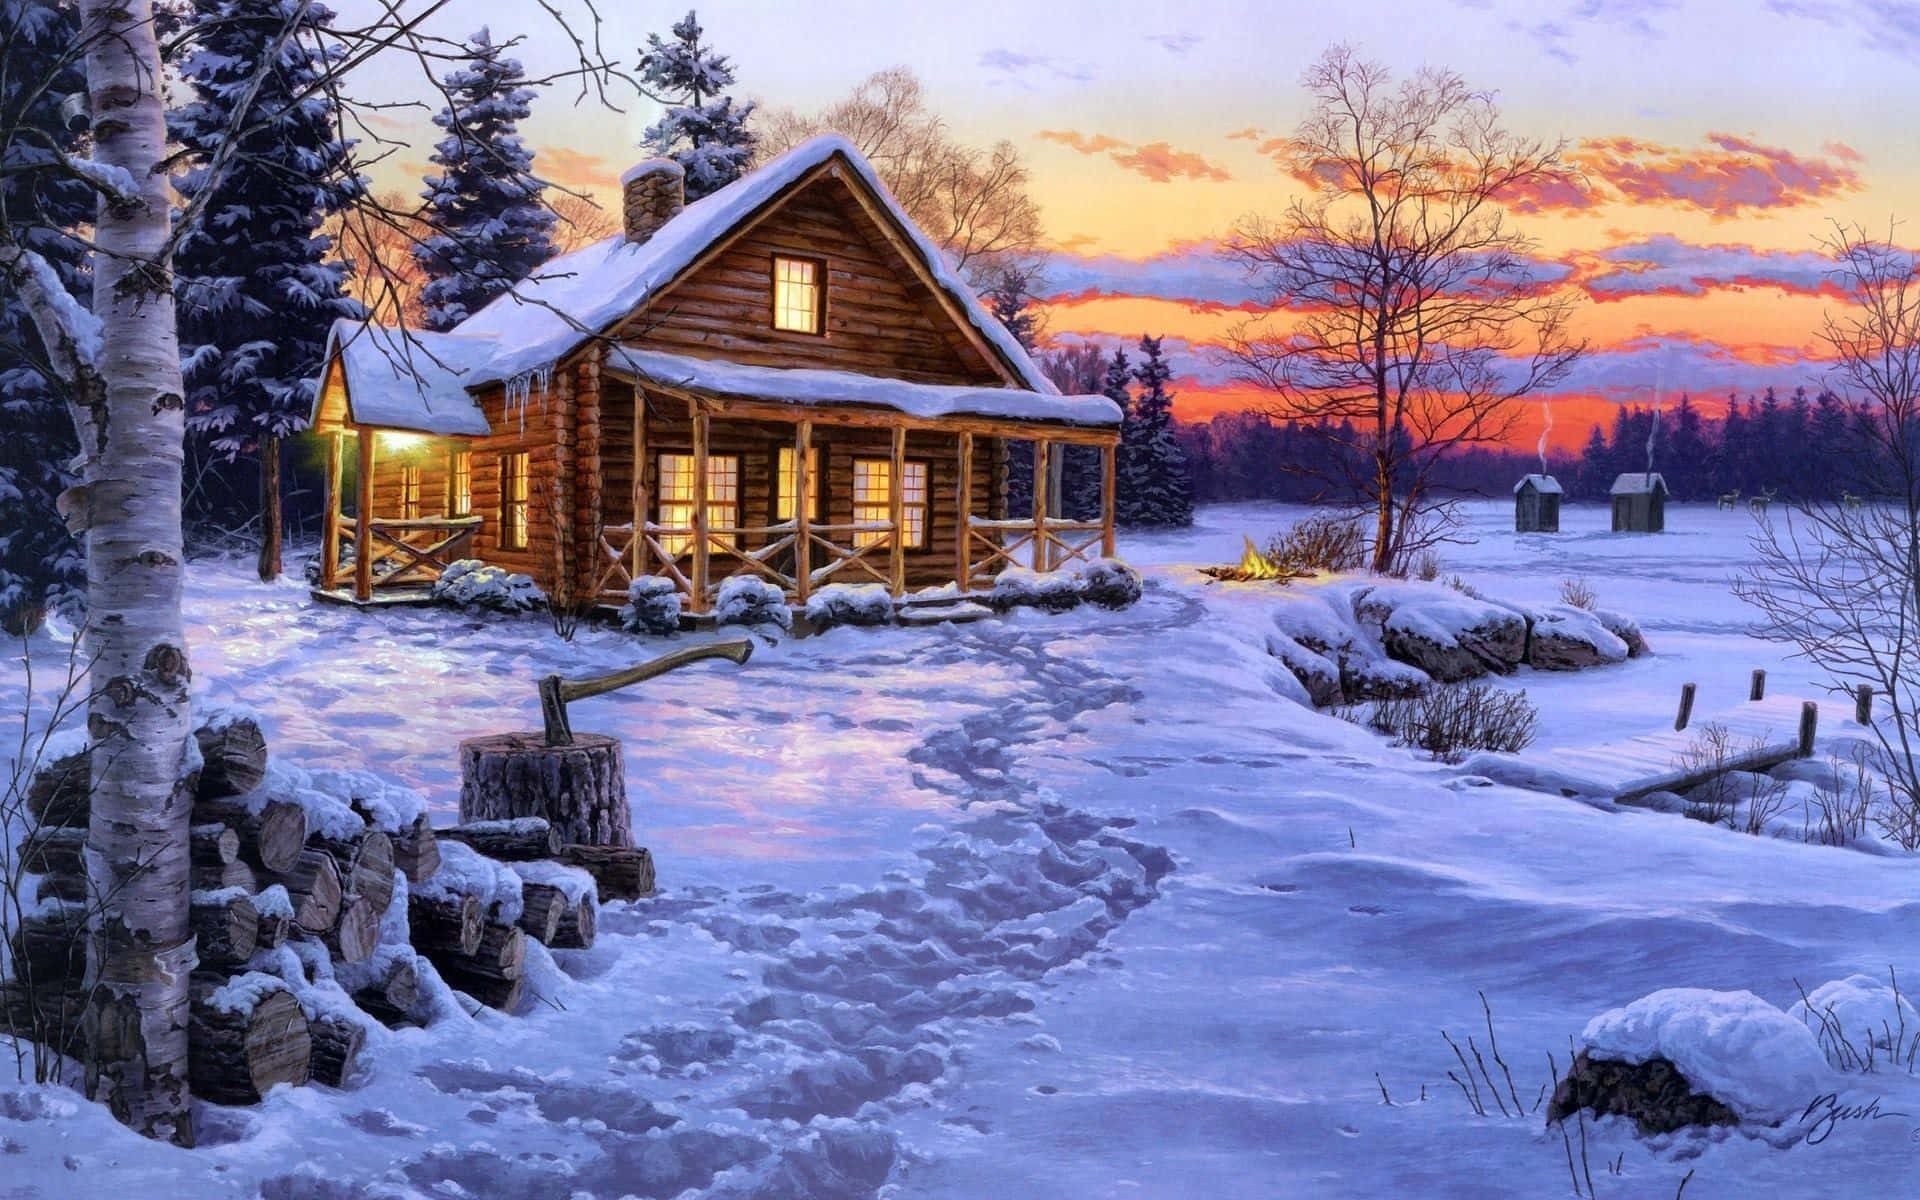 A Snowy Cozy Winter Cabin in the Woods Wallpaper